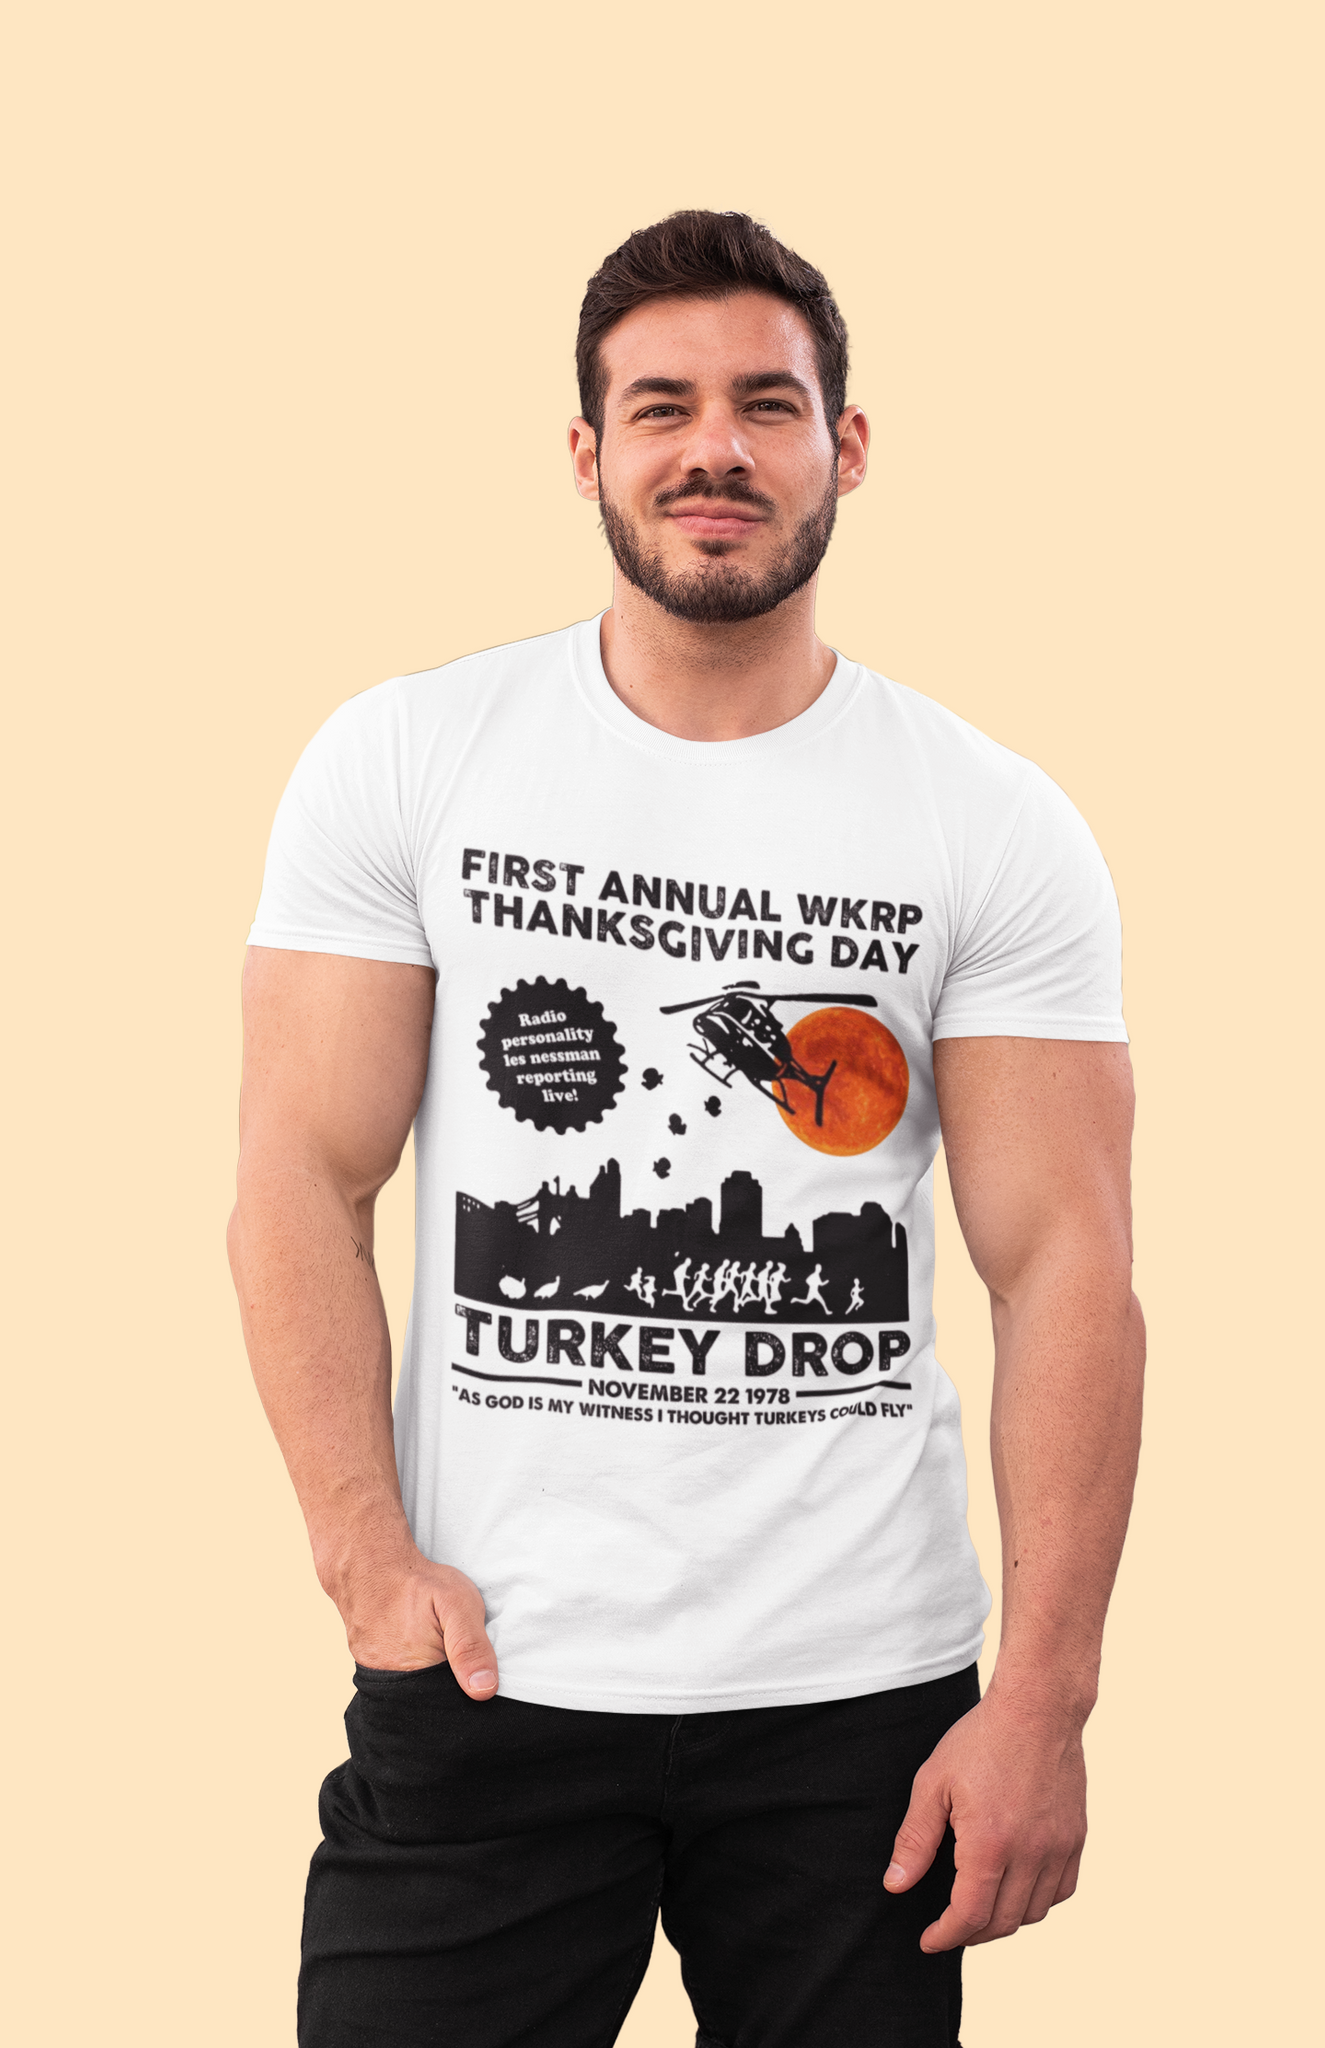 WKRP In Cincinnati T Shirt, First Annual WKRP Thanksgiving Day Turkey Drop Shirt, Thanksgiving Gifts